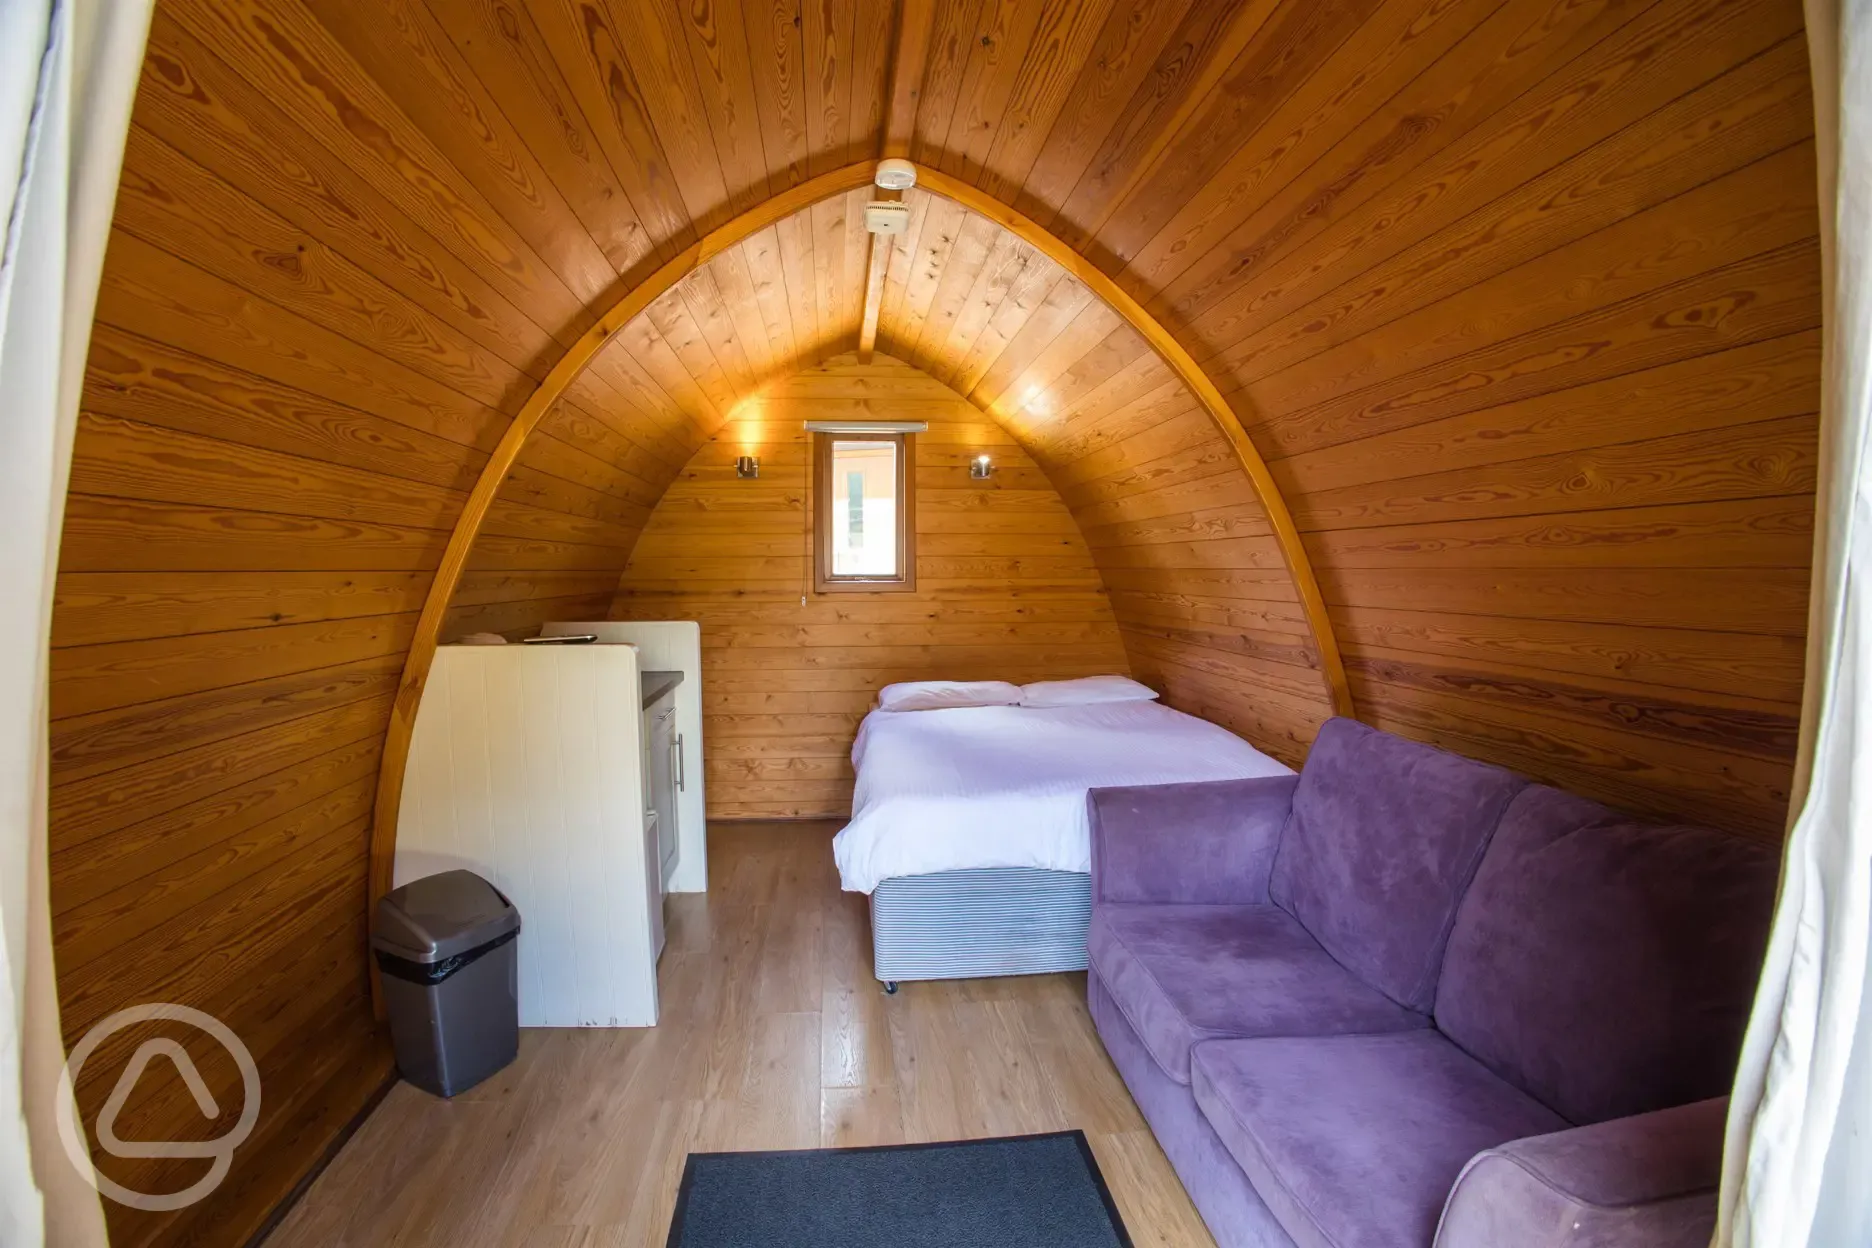 Camping mega pod interior